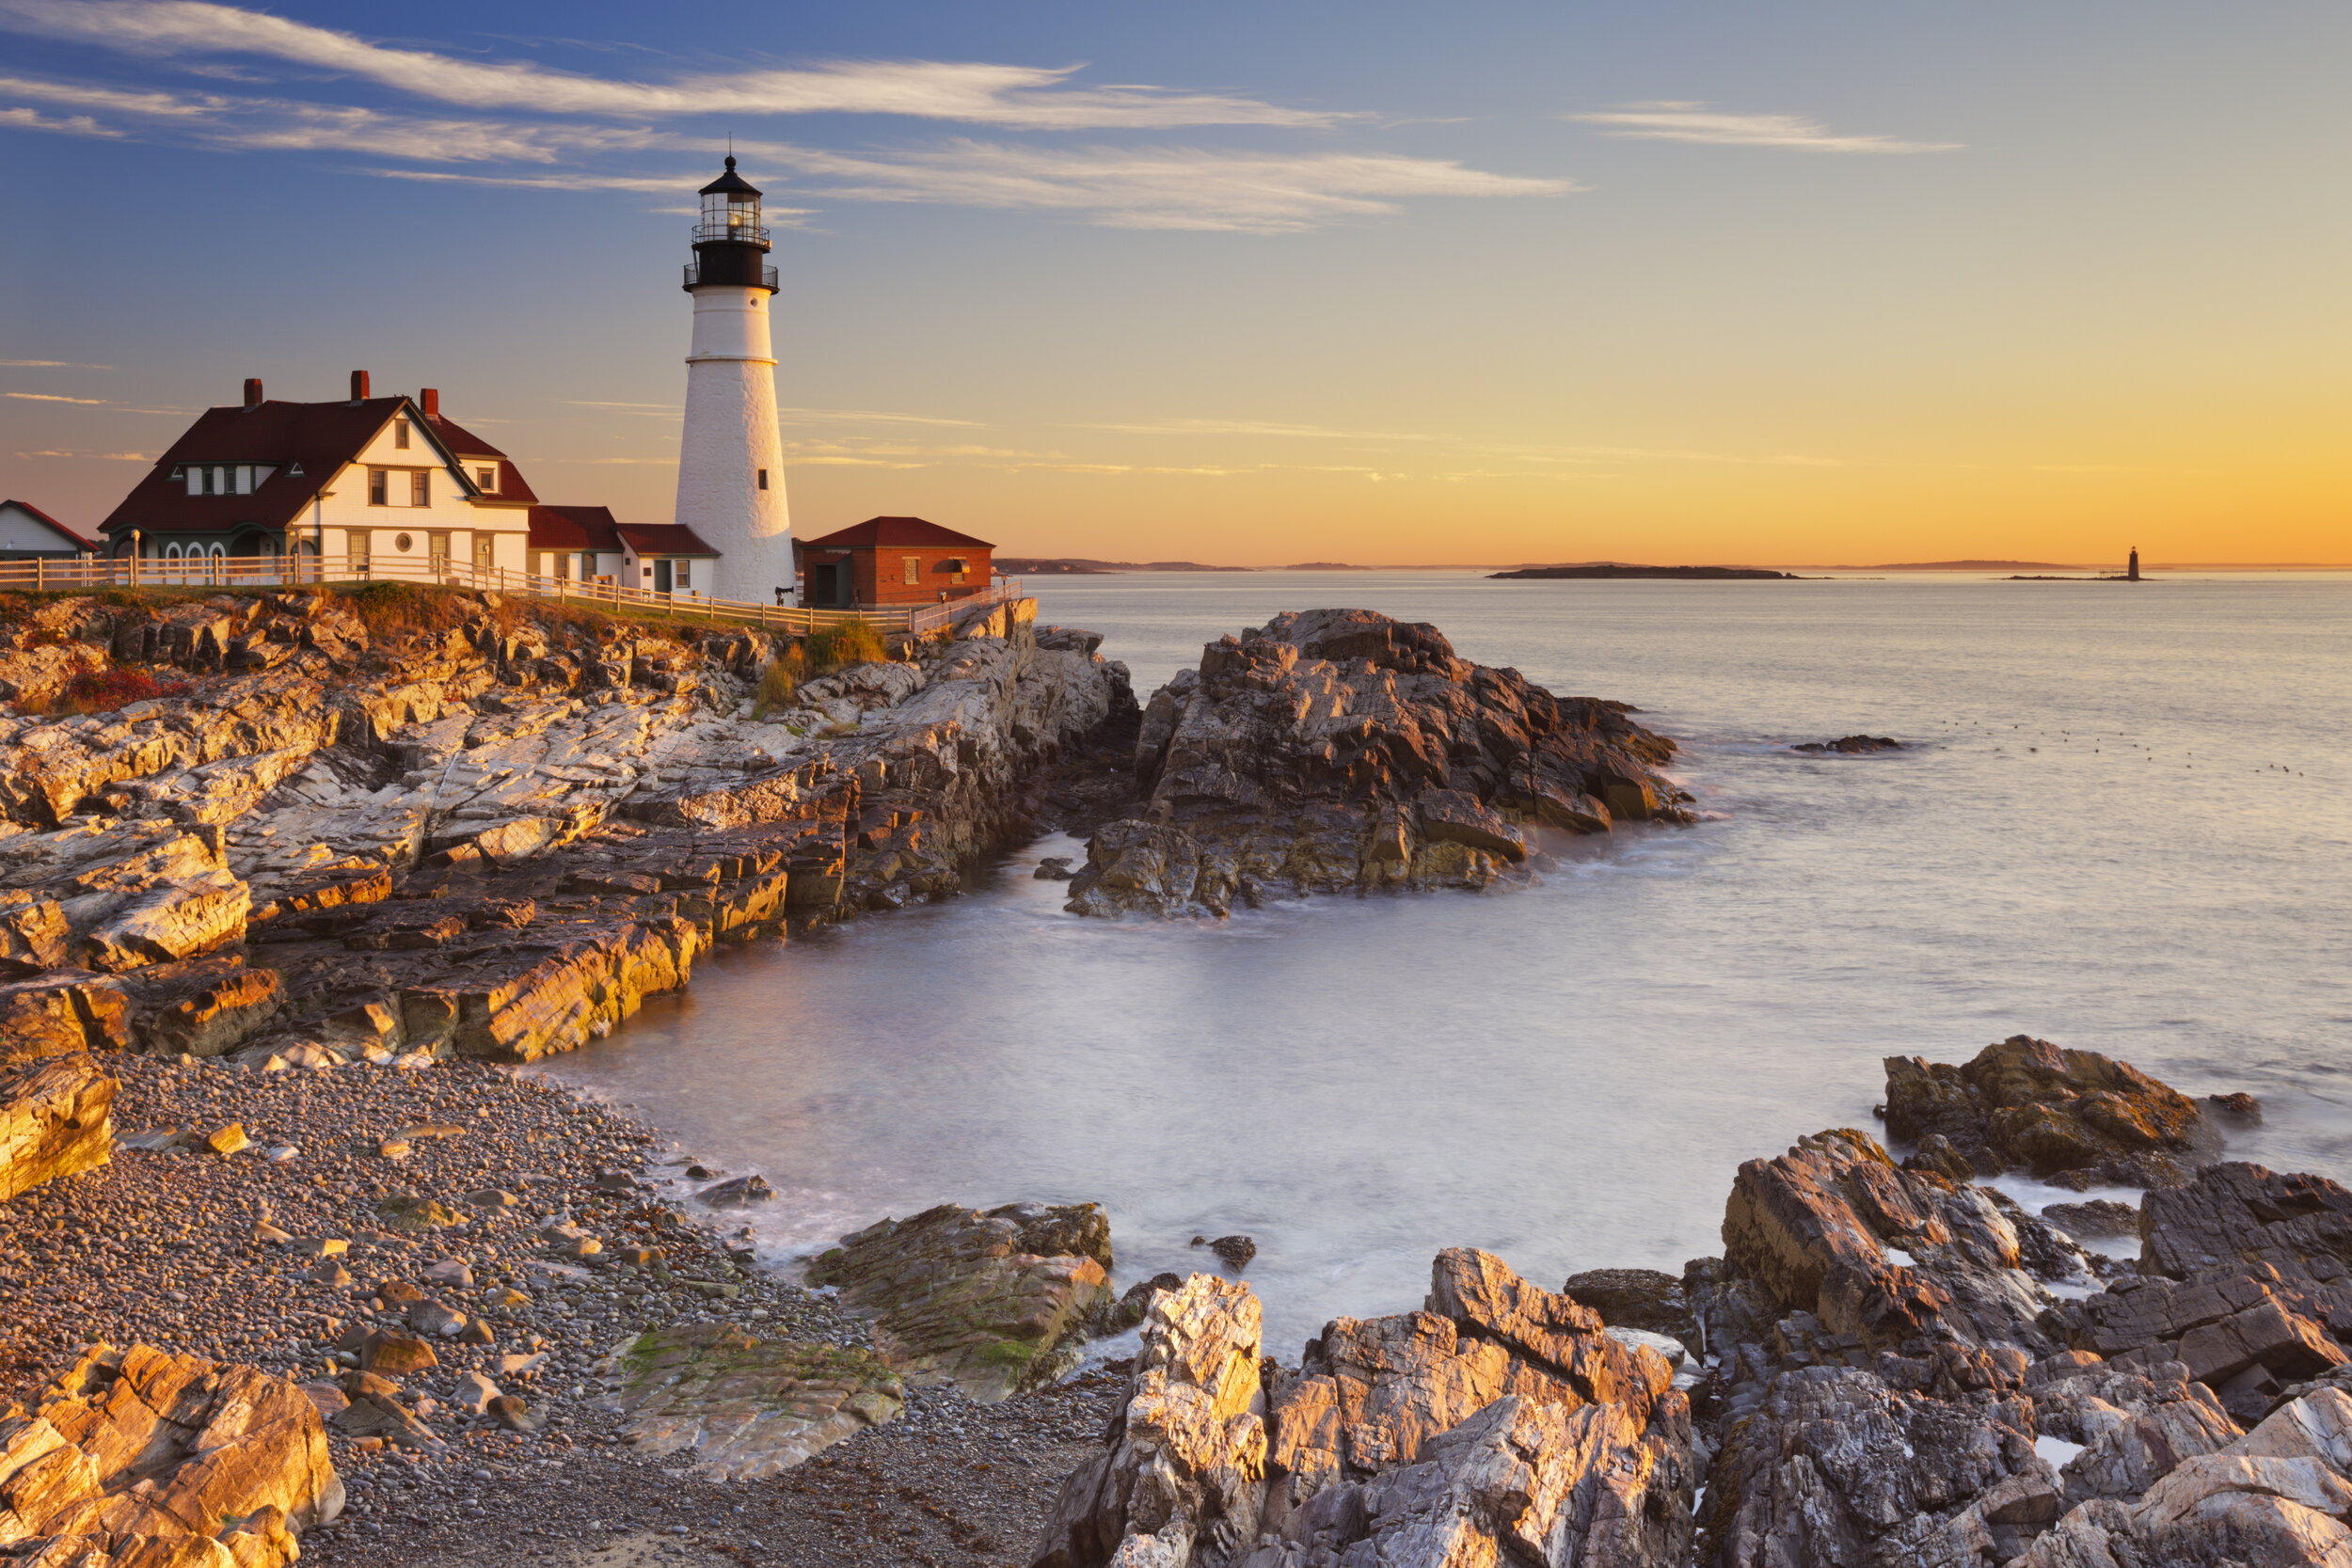   Maine (photo credit: Ritz-Carlton Yacht Collection)  